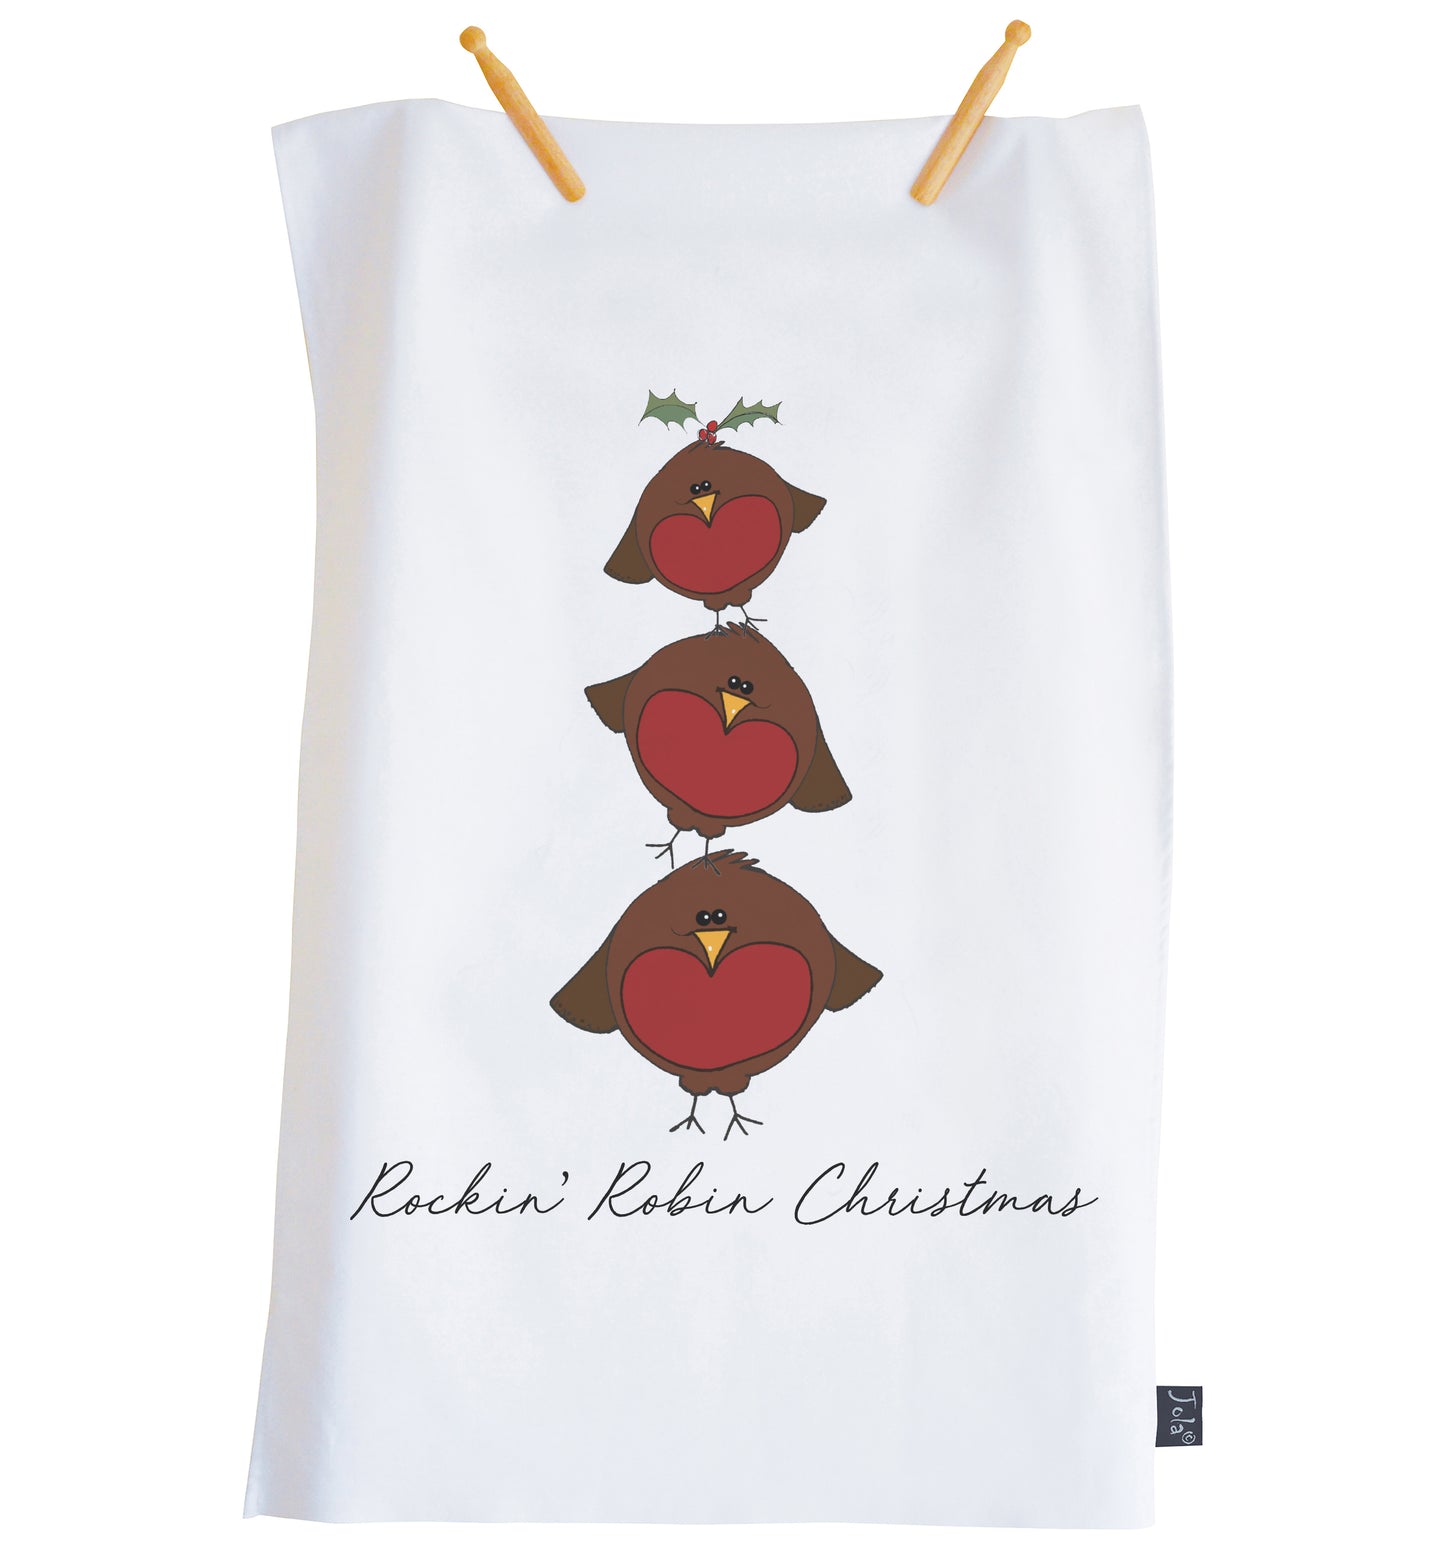 Rockin Robin Christmas Tea Towel